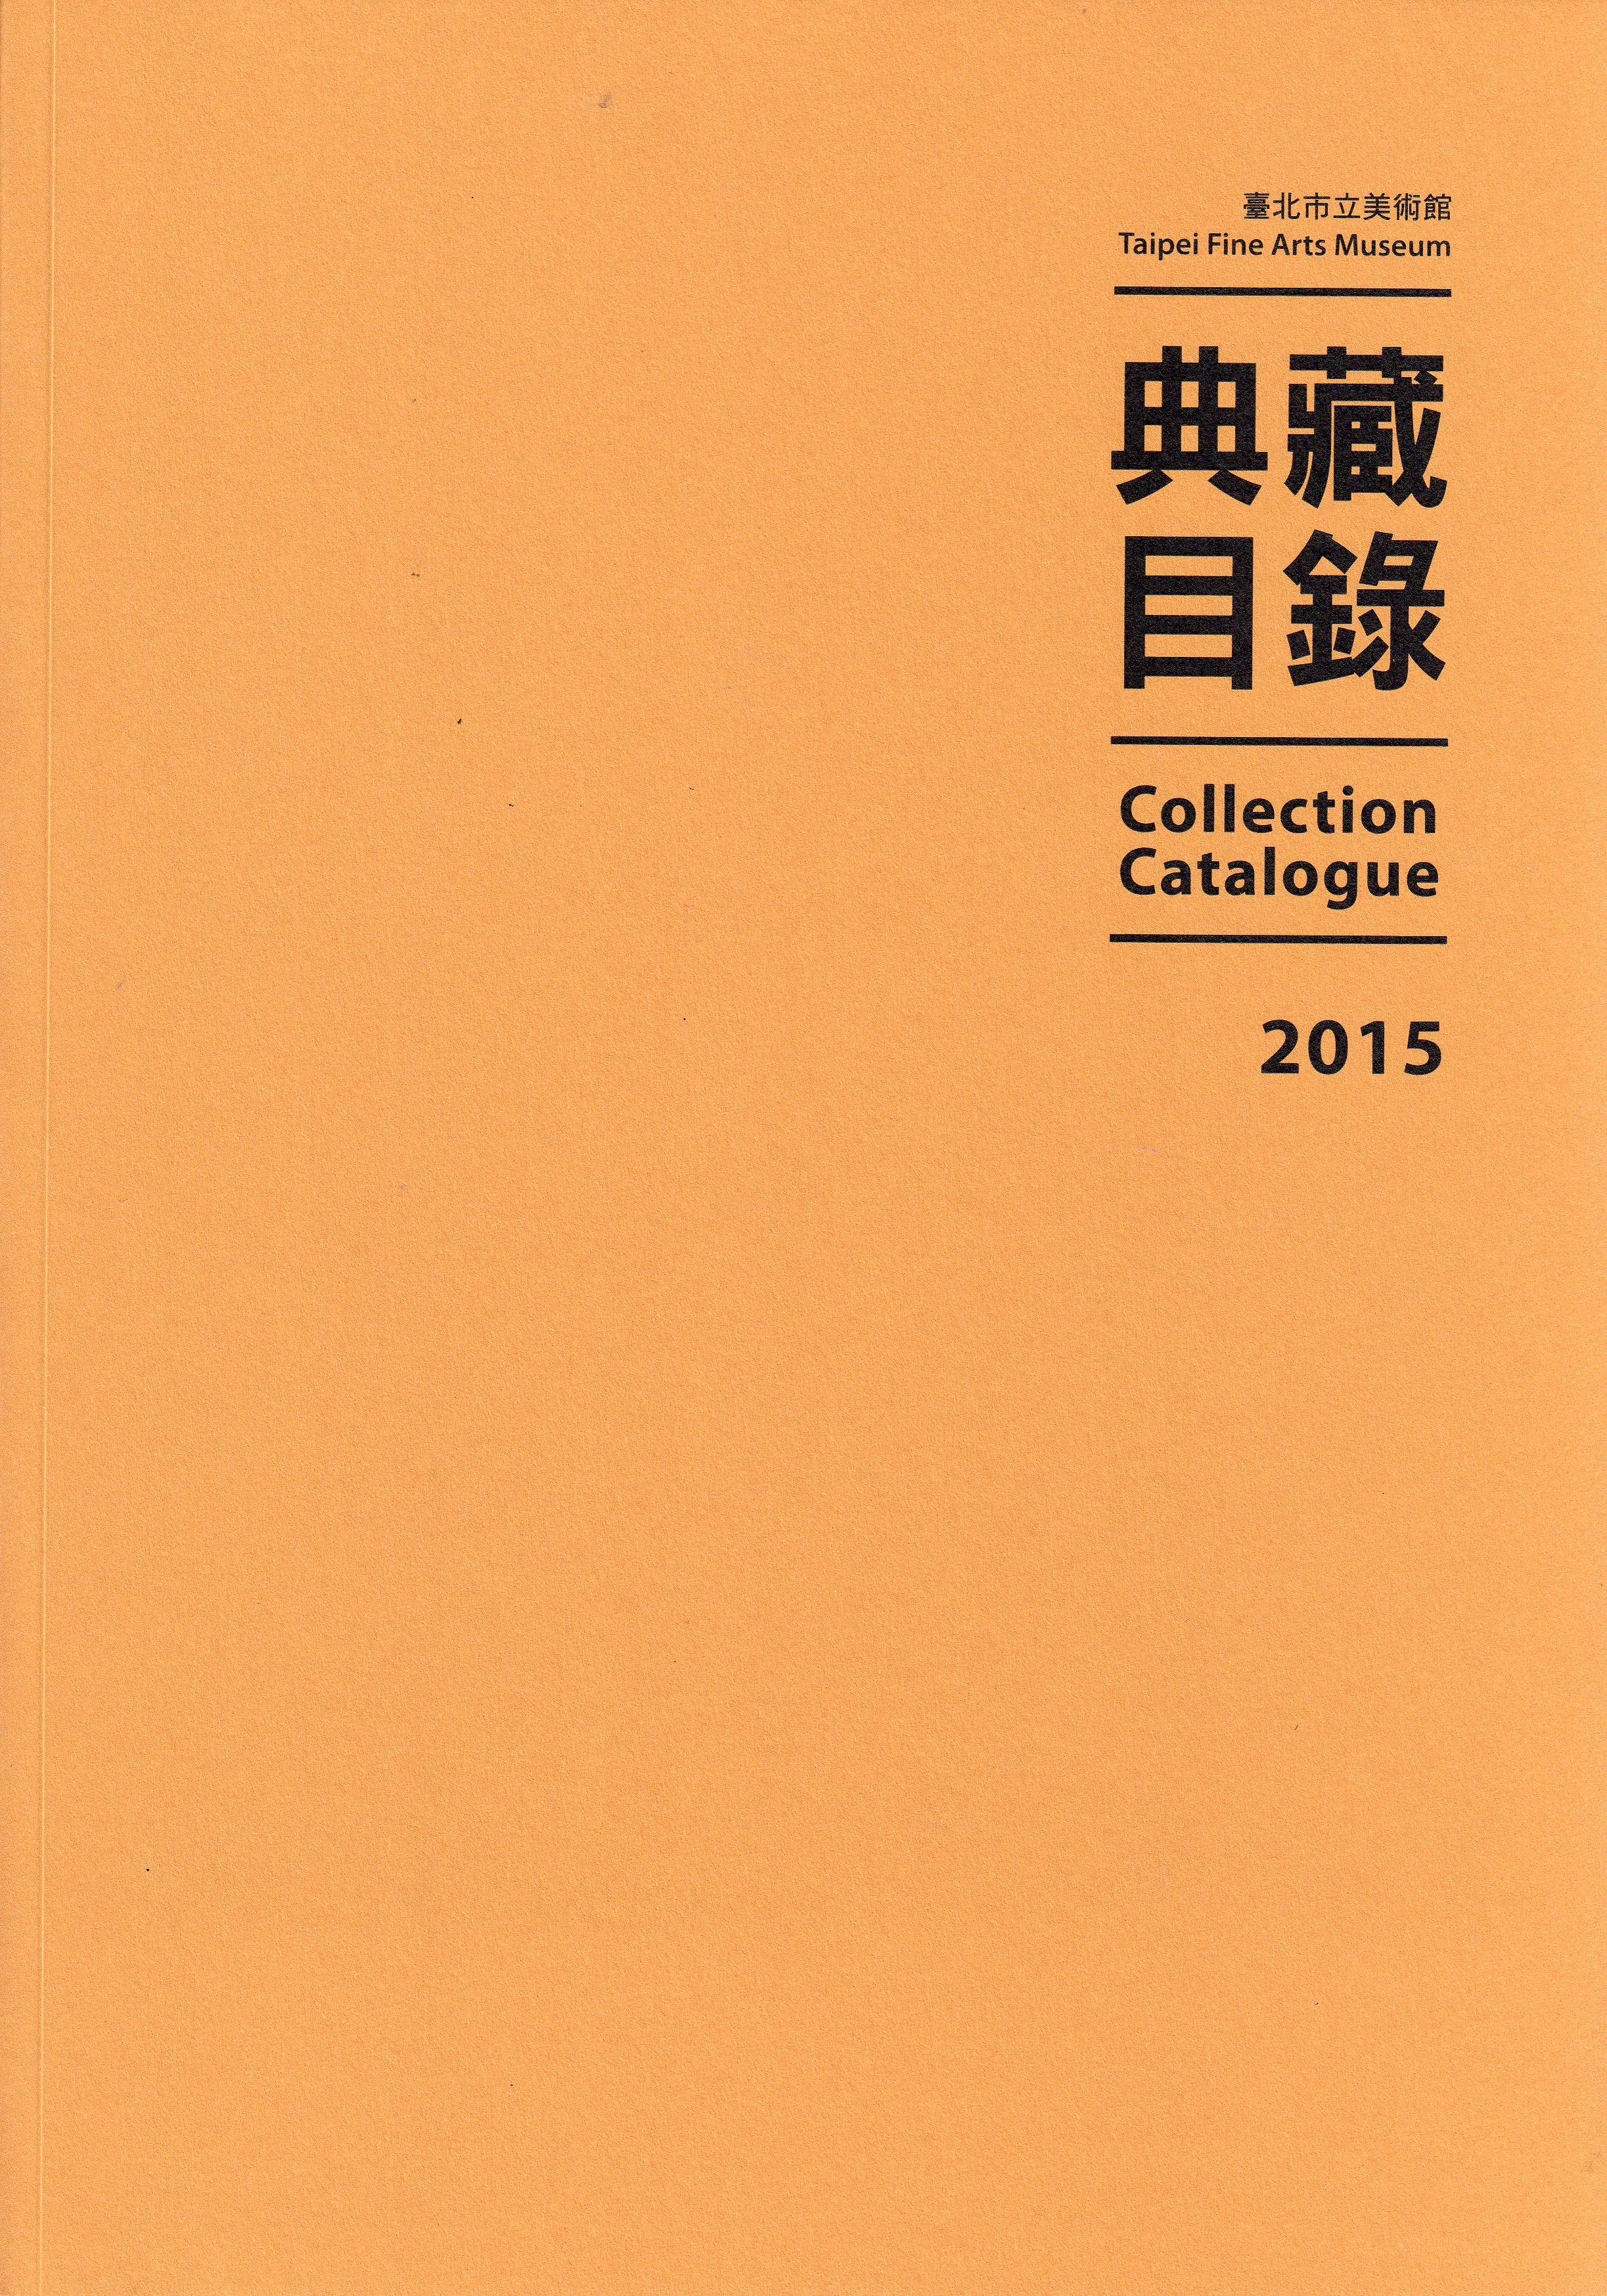 Collection Catalogue 2015 的圖說